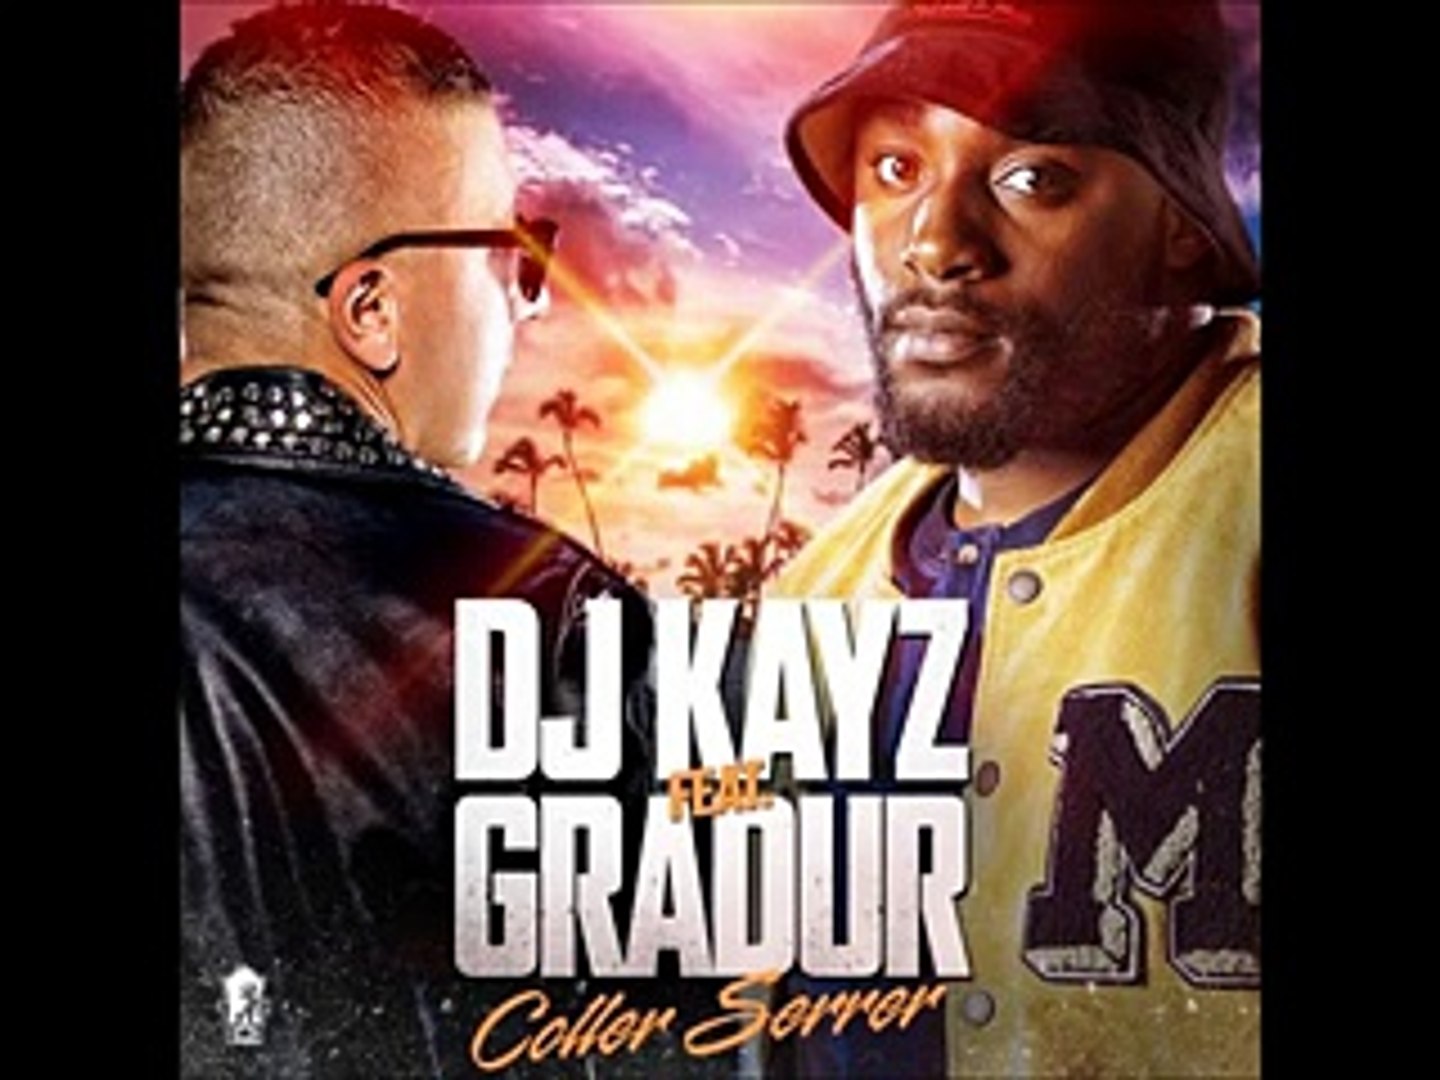 Gradur ft Dj Kayz - Coller Serrer - Vidéo Dailymotion